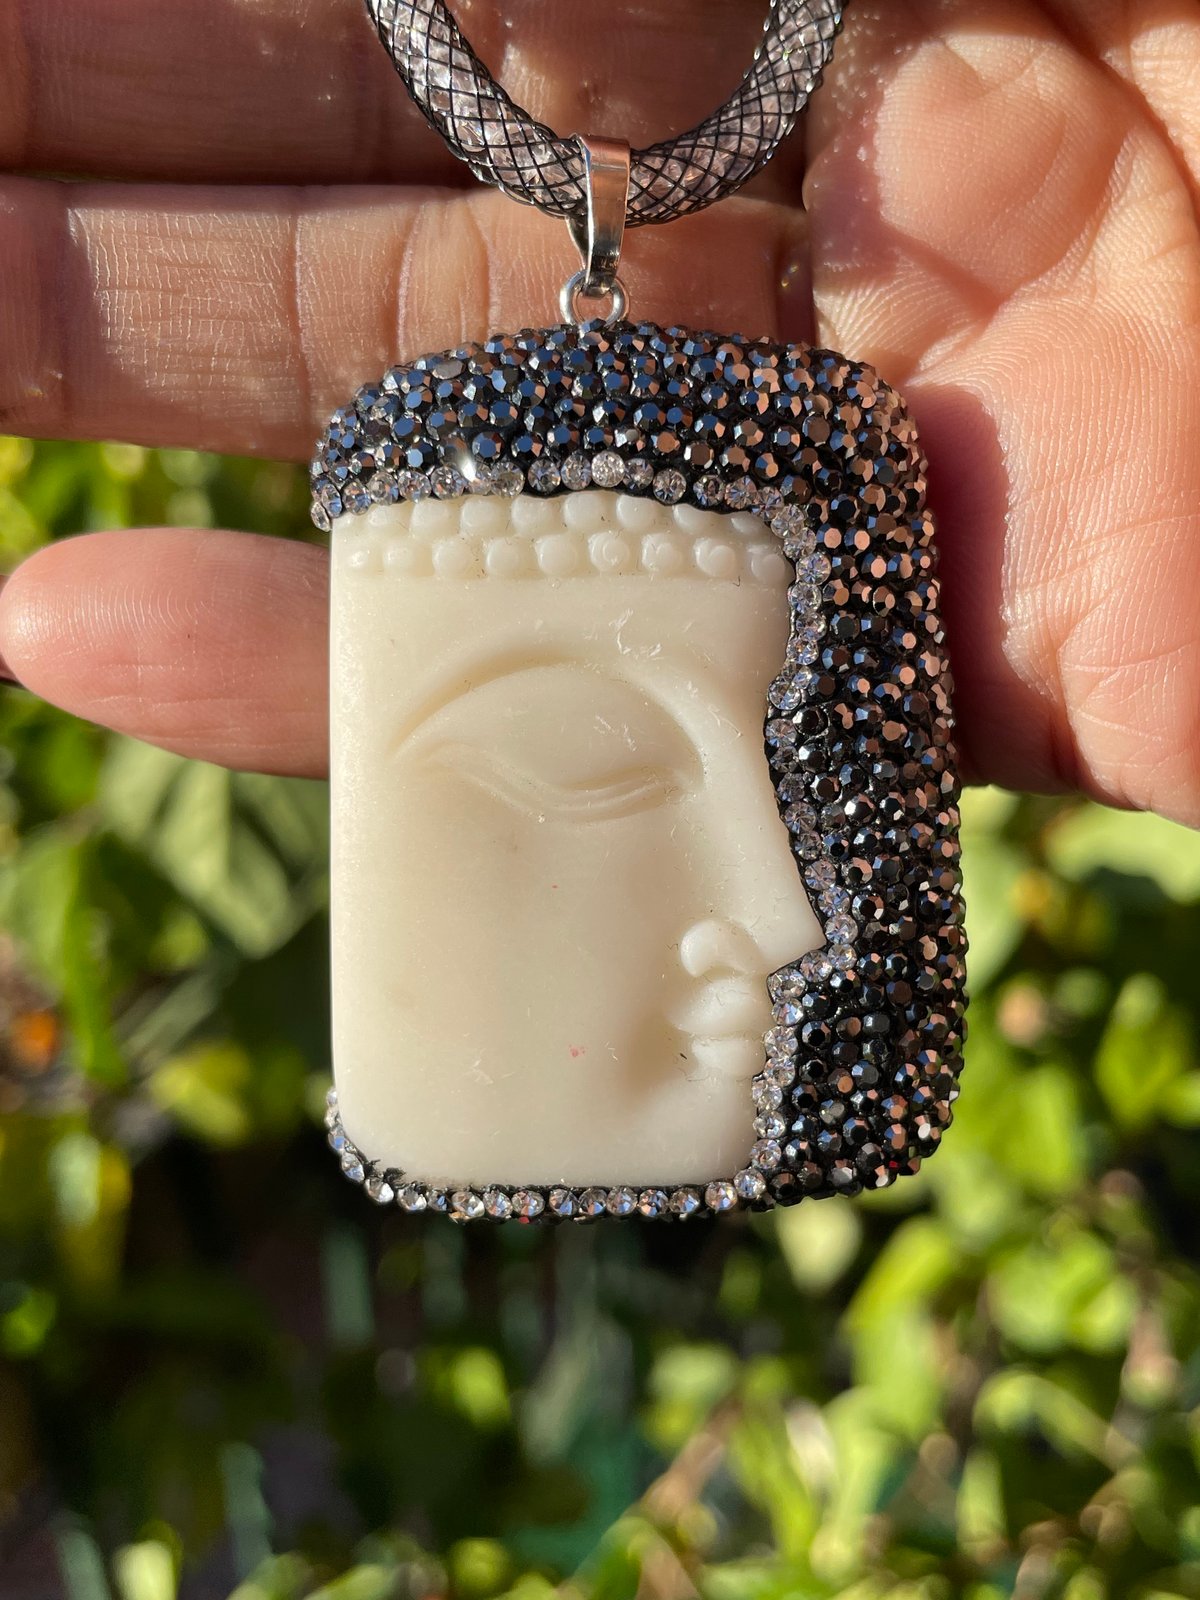 Cream/ivory Buddha face pendant with hematite crystals